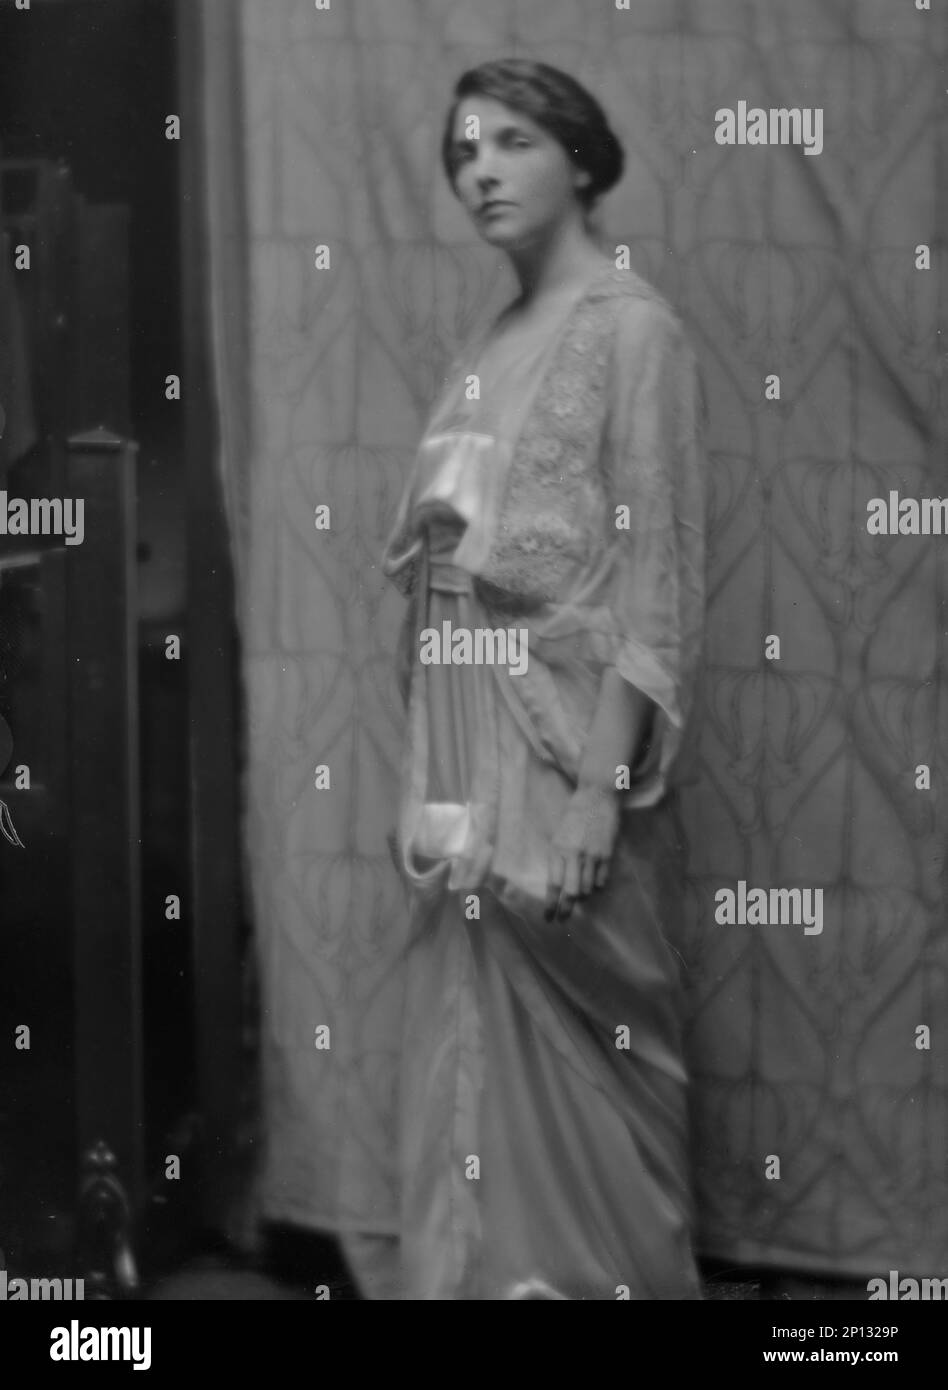 Wallach, Alma, Miss, portrait photograph, 1914 Jan. 24. Stock Photo